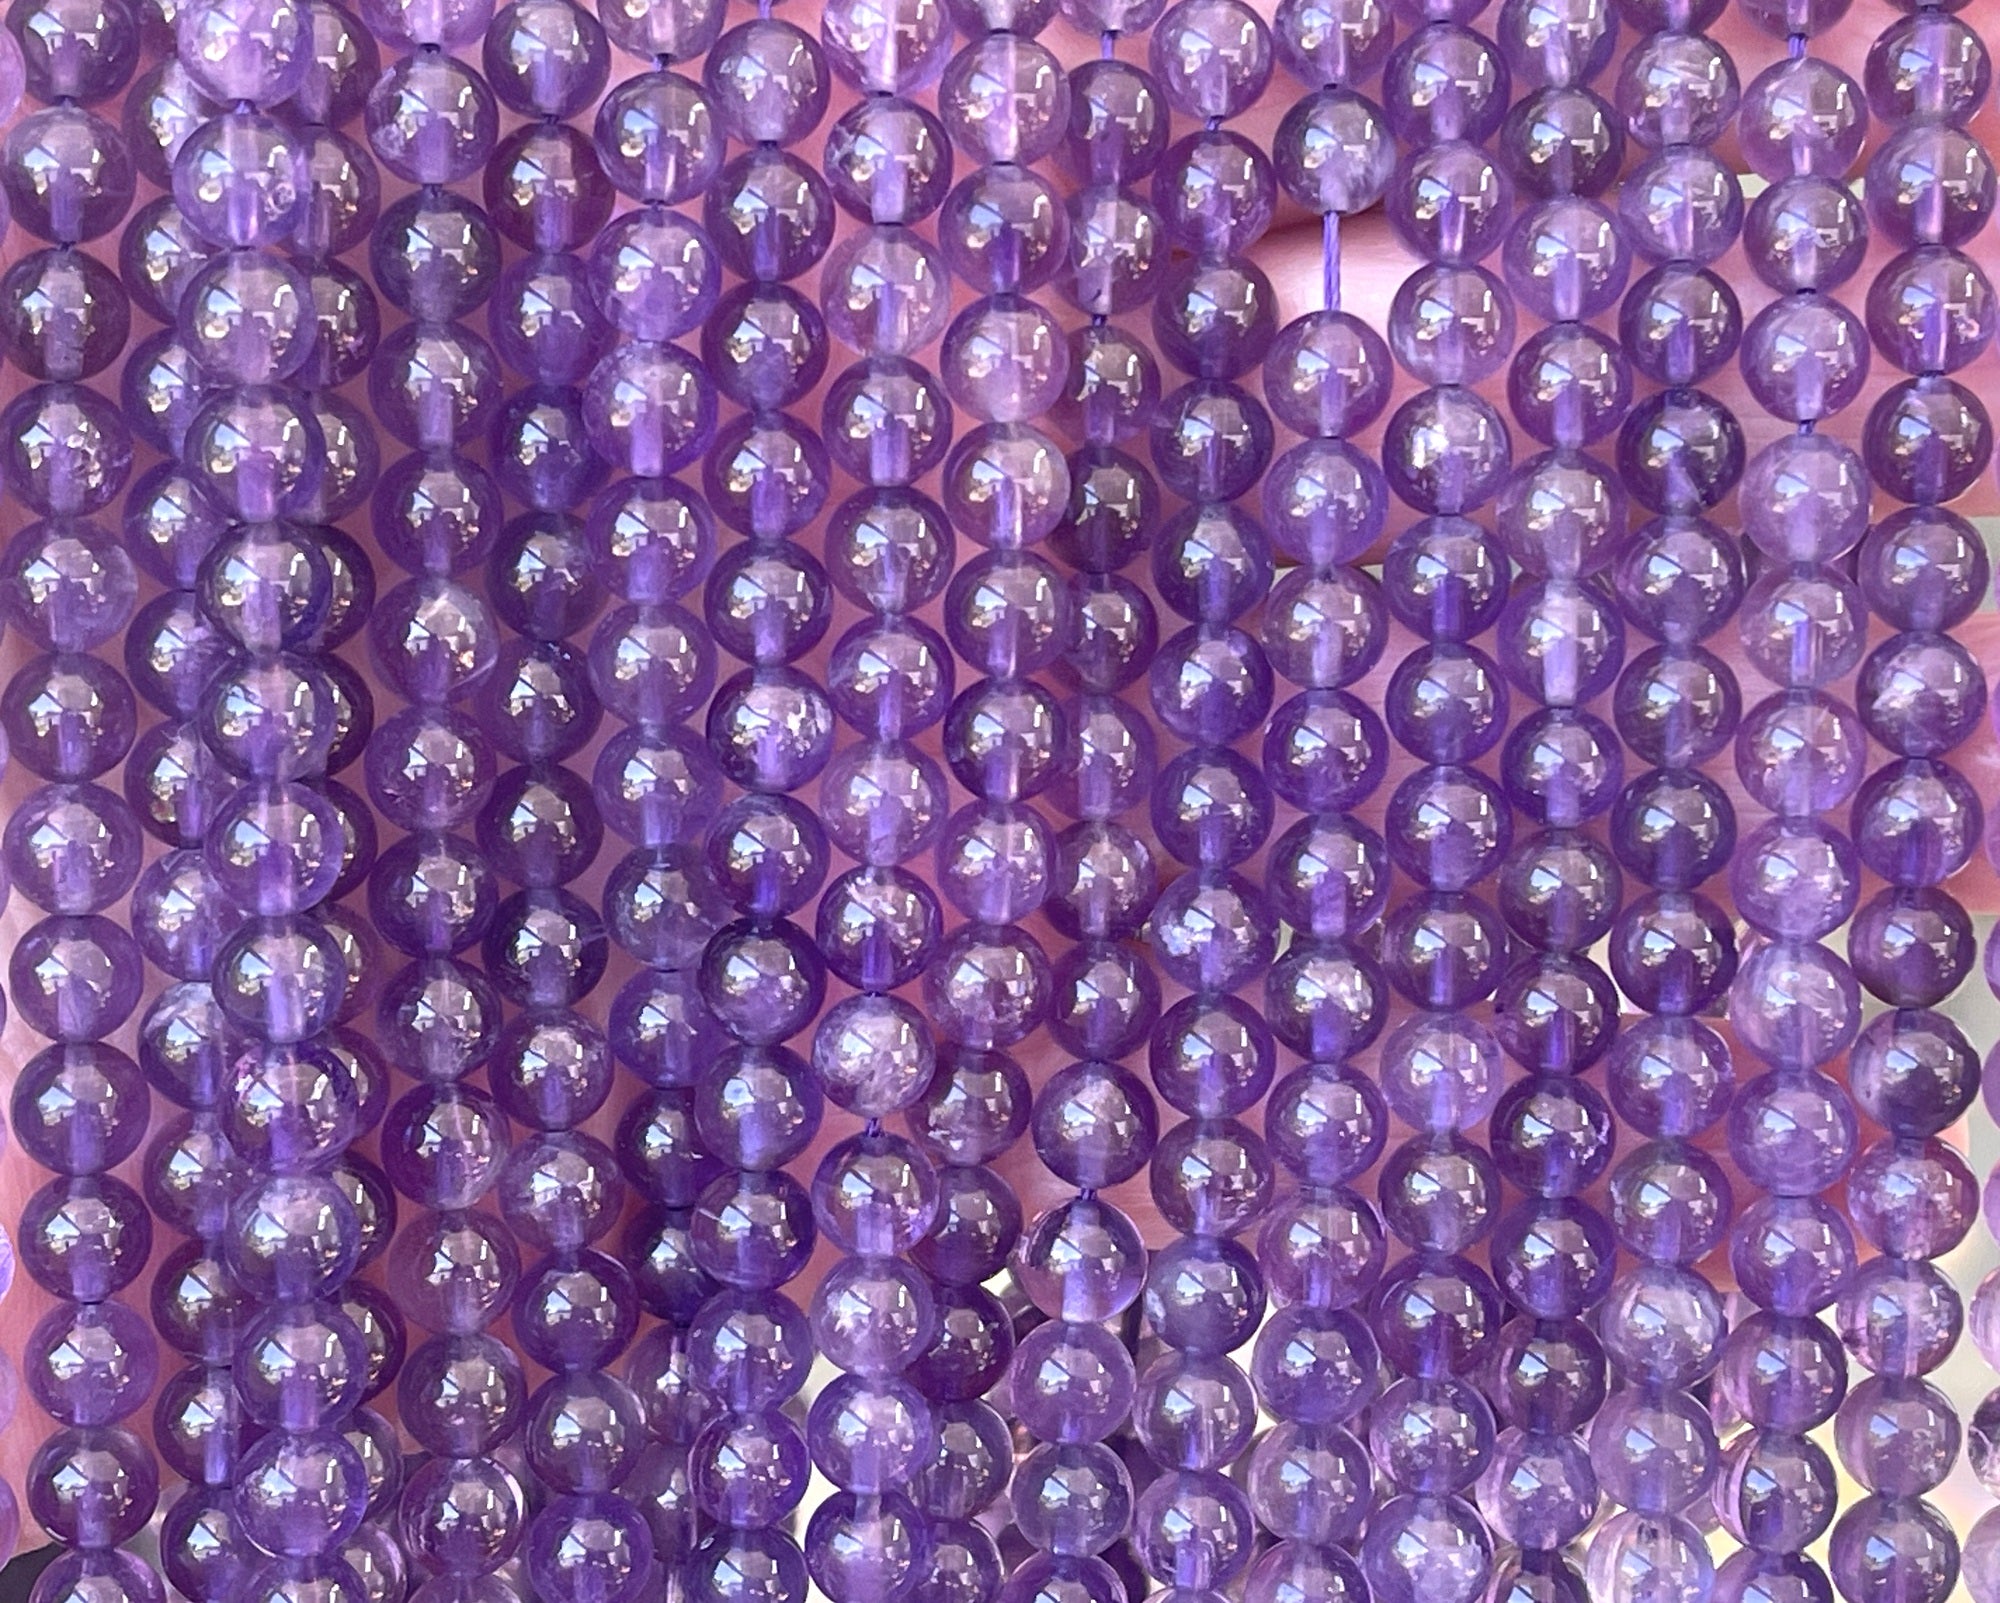 Amethyst 6mm round natural gemstone beads 15" strand